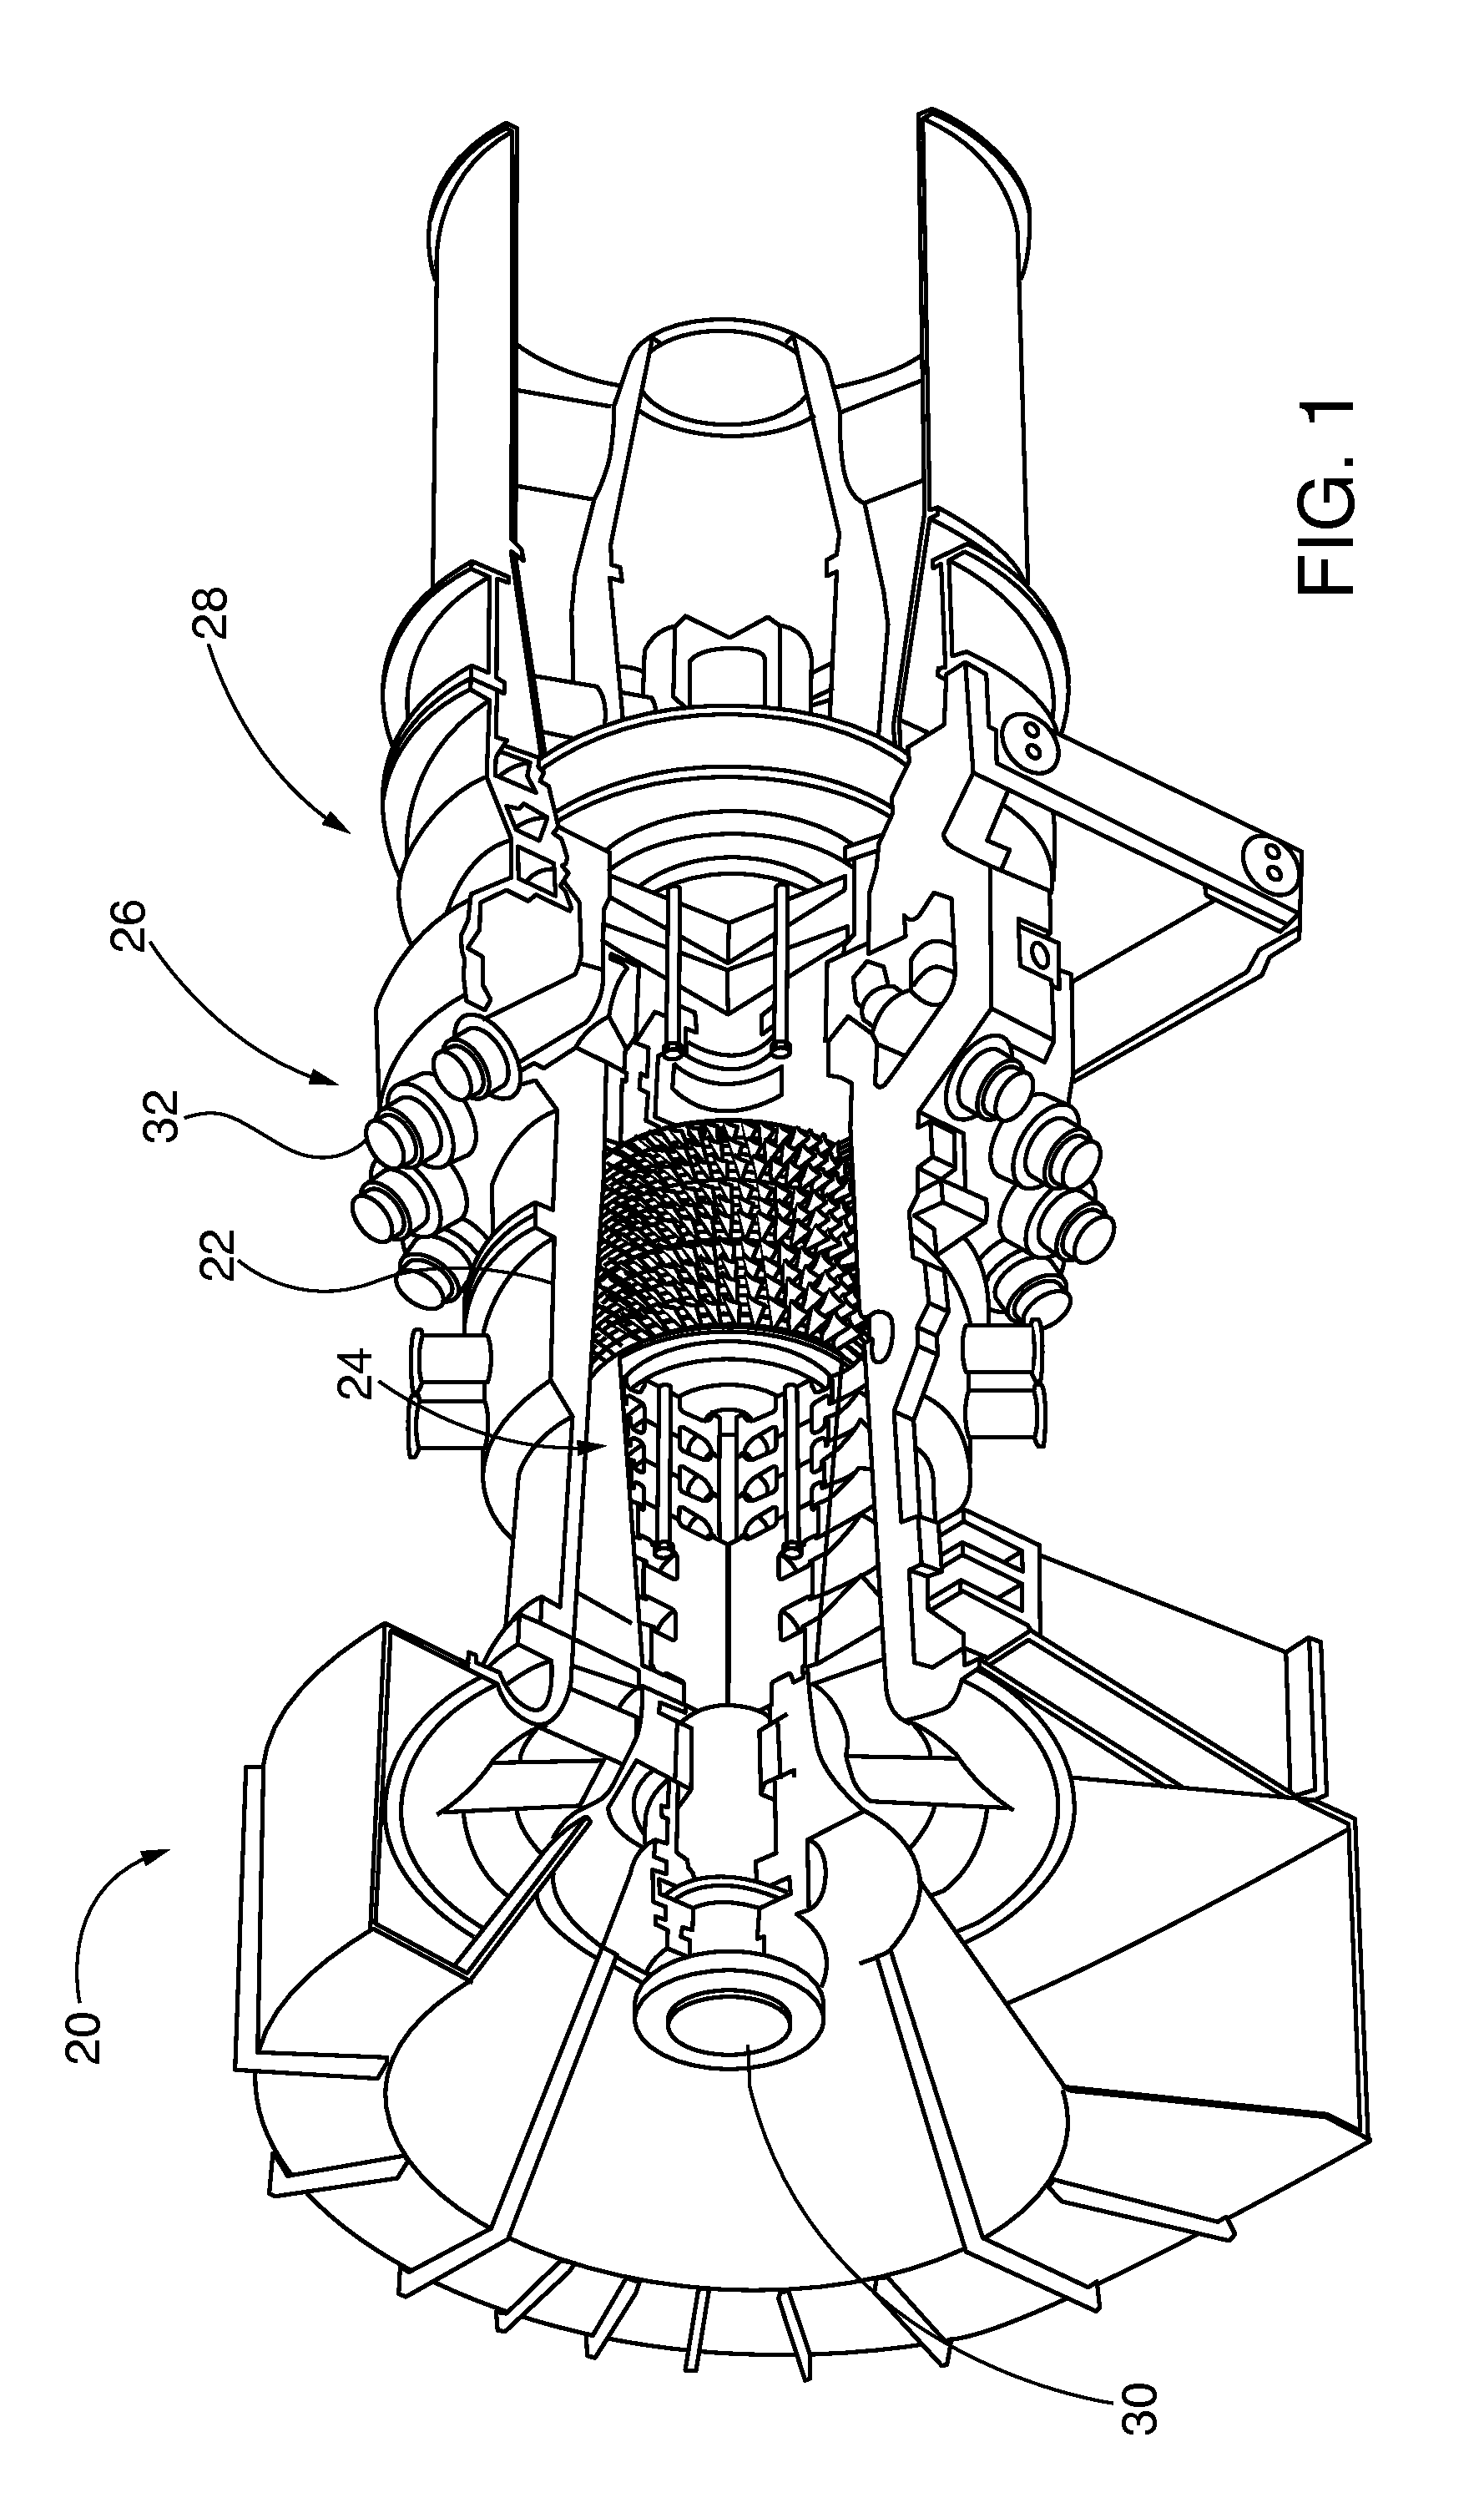 Gas turbine engine combustor basket with inverted platefins